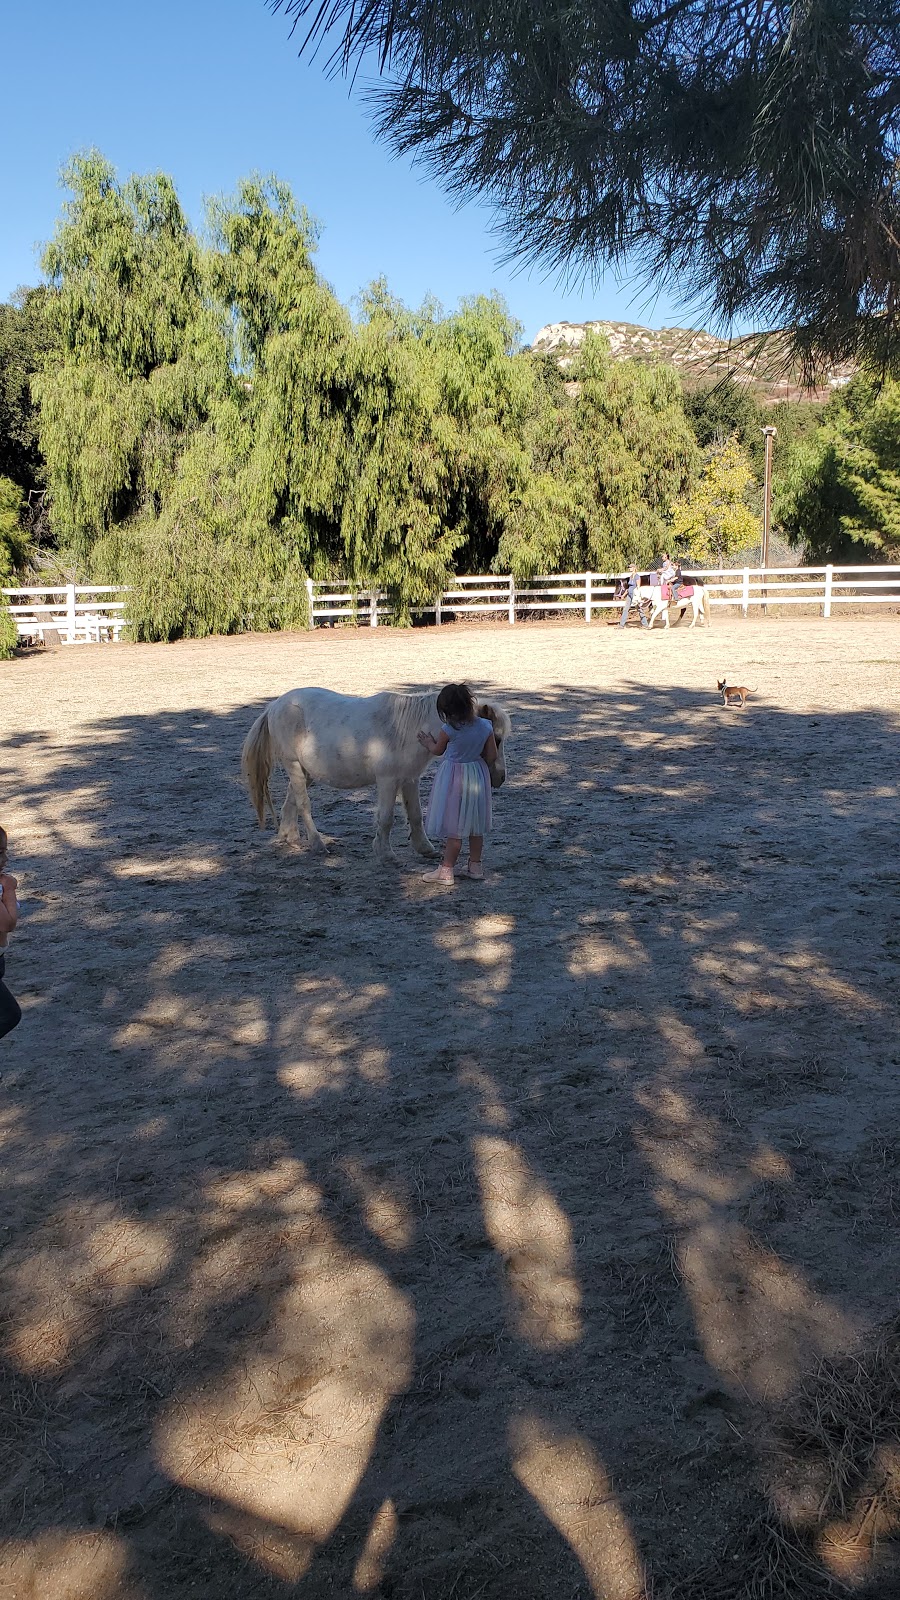 Cheyenne Arabians Pony Rides & Petting Zoo | 1927 Orange Ave, Ramona, CA 92065 | Phone: (760) 788-3780